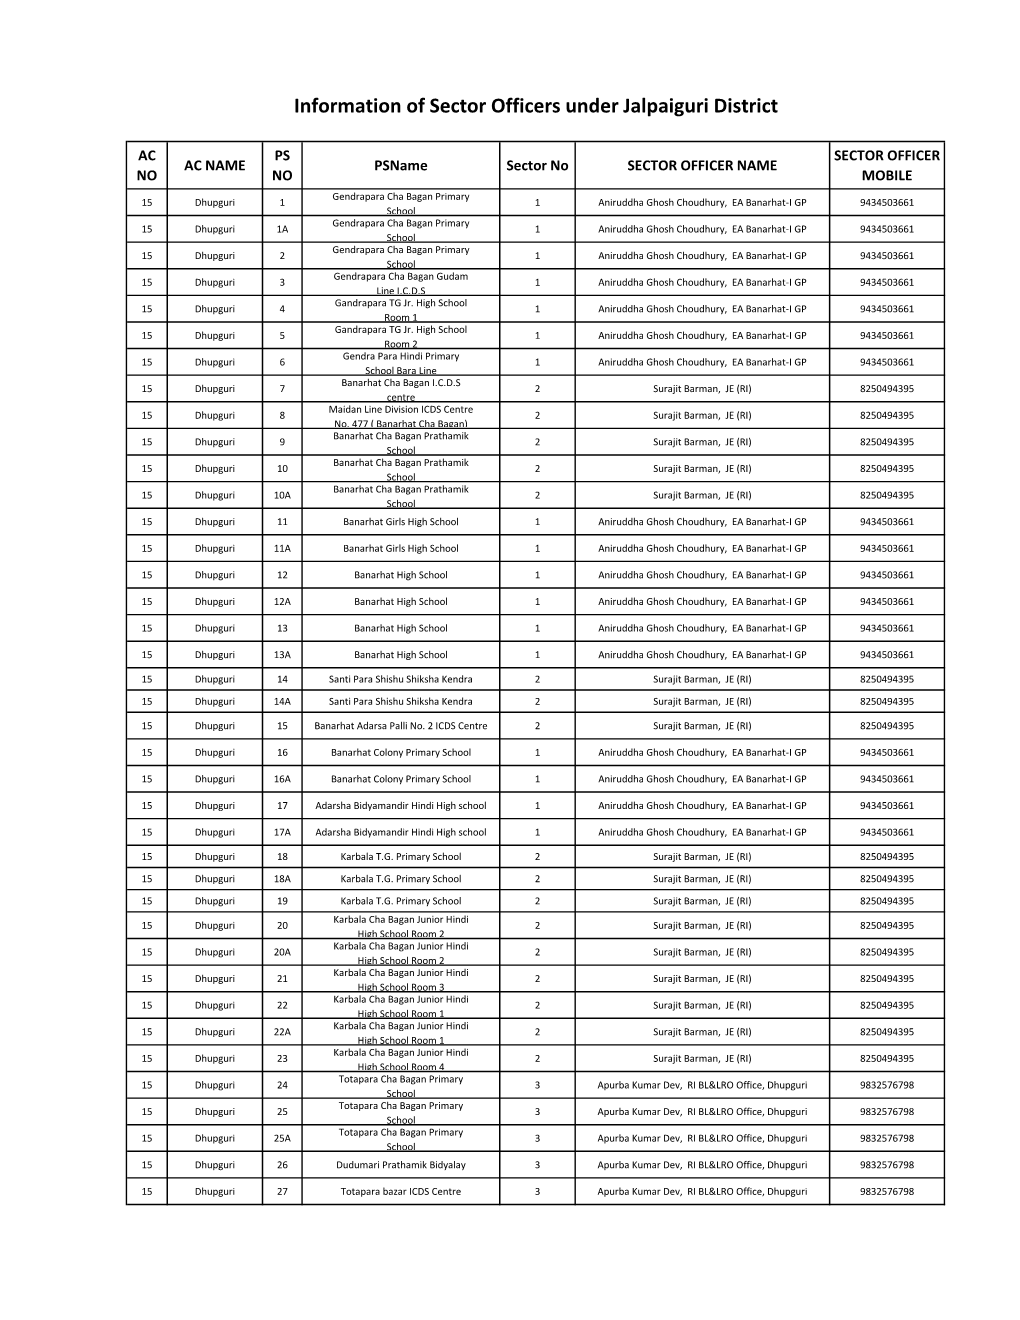 Information of Sector Officers Under Jalpaiguri District